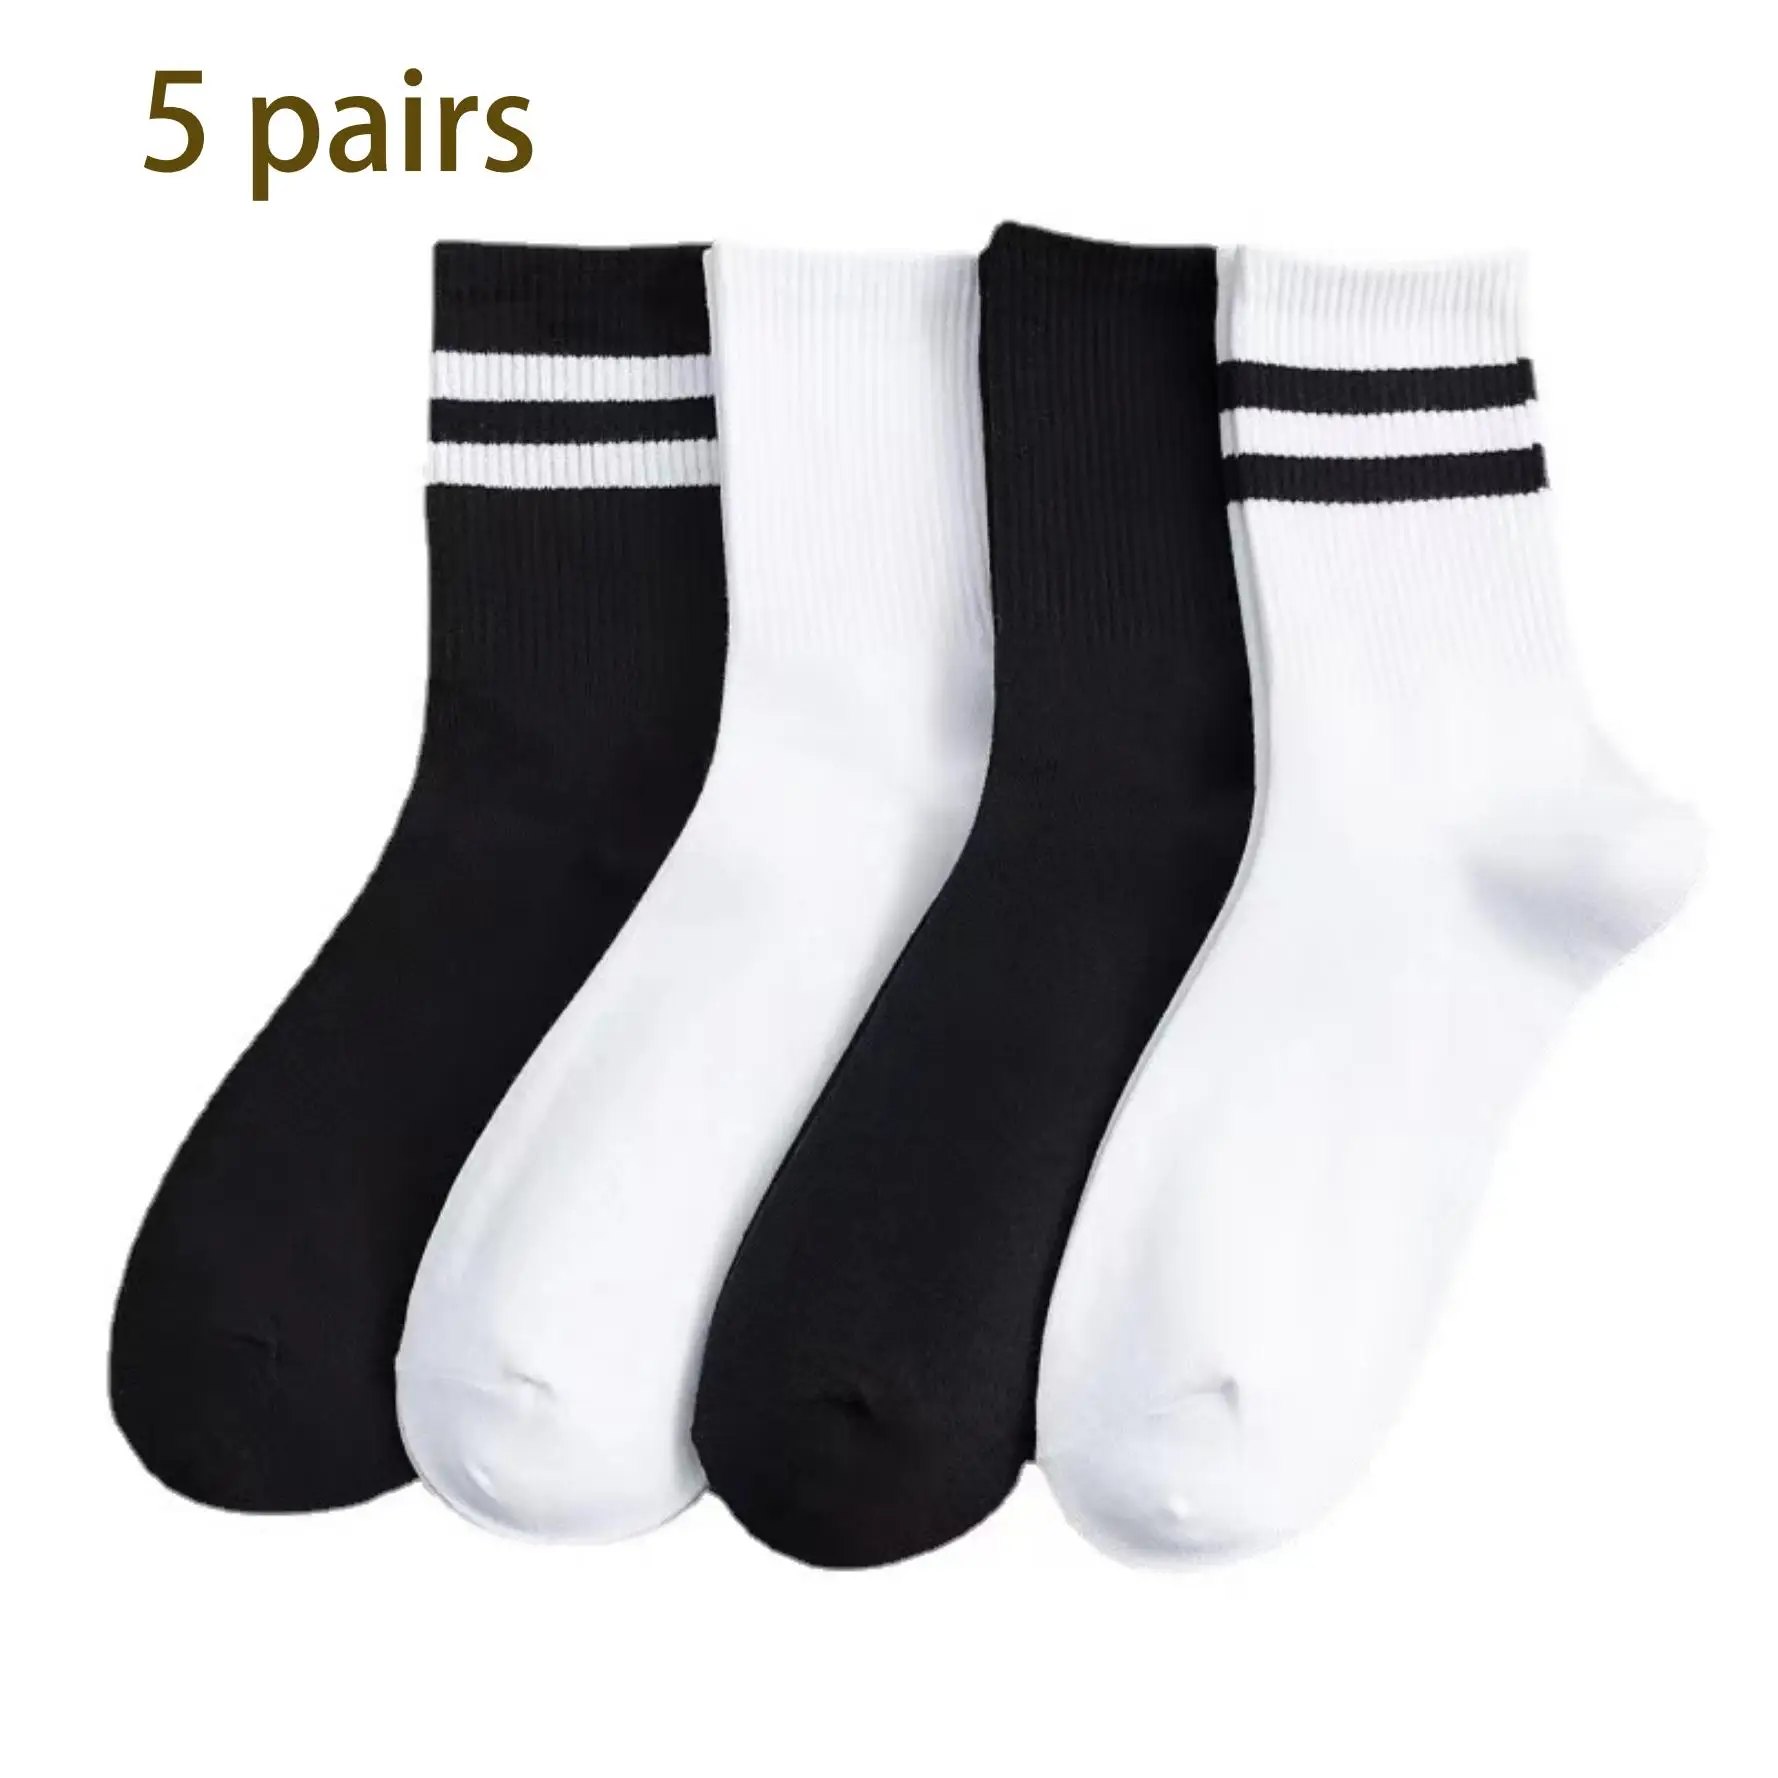 

Yoga socks sports stockings four seasons unisex black and white long tube accessories yoga athleisure socks